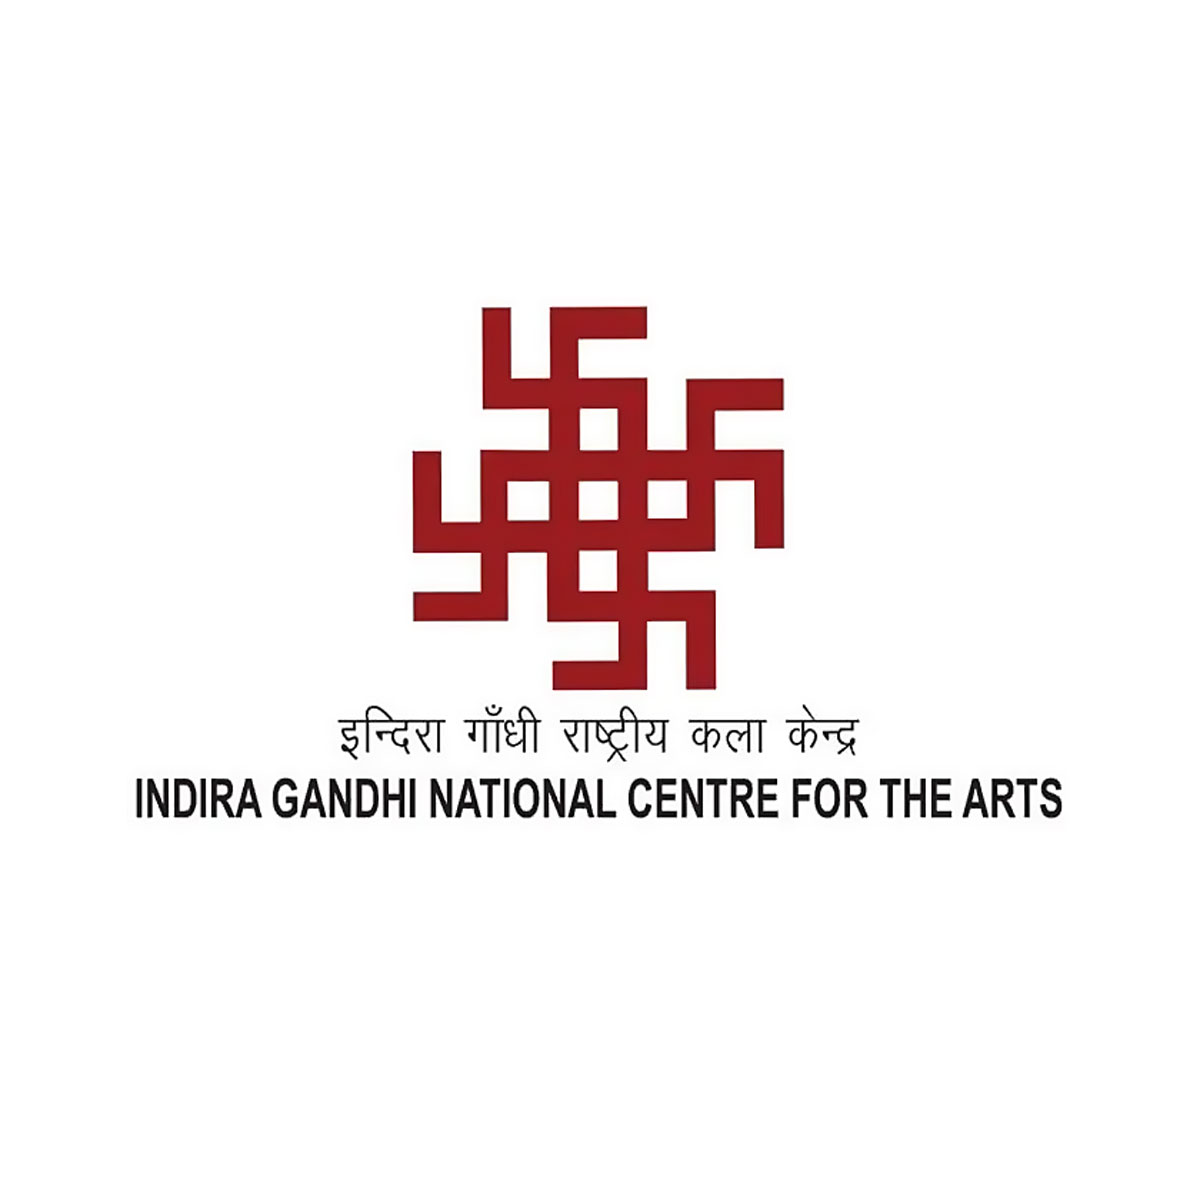 Ignca Graphic Designer Recruitment - Indira Gandhi National Centre For The Arts Job Vacancies